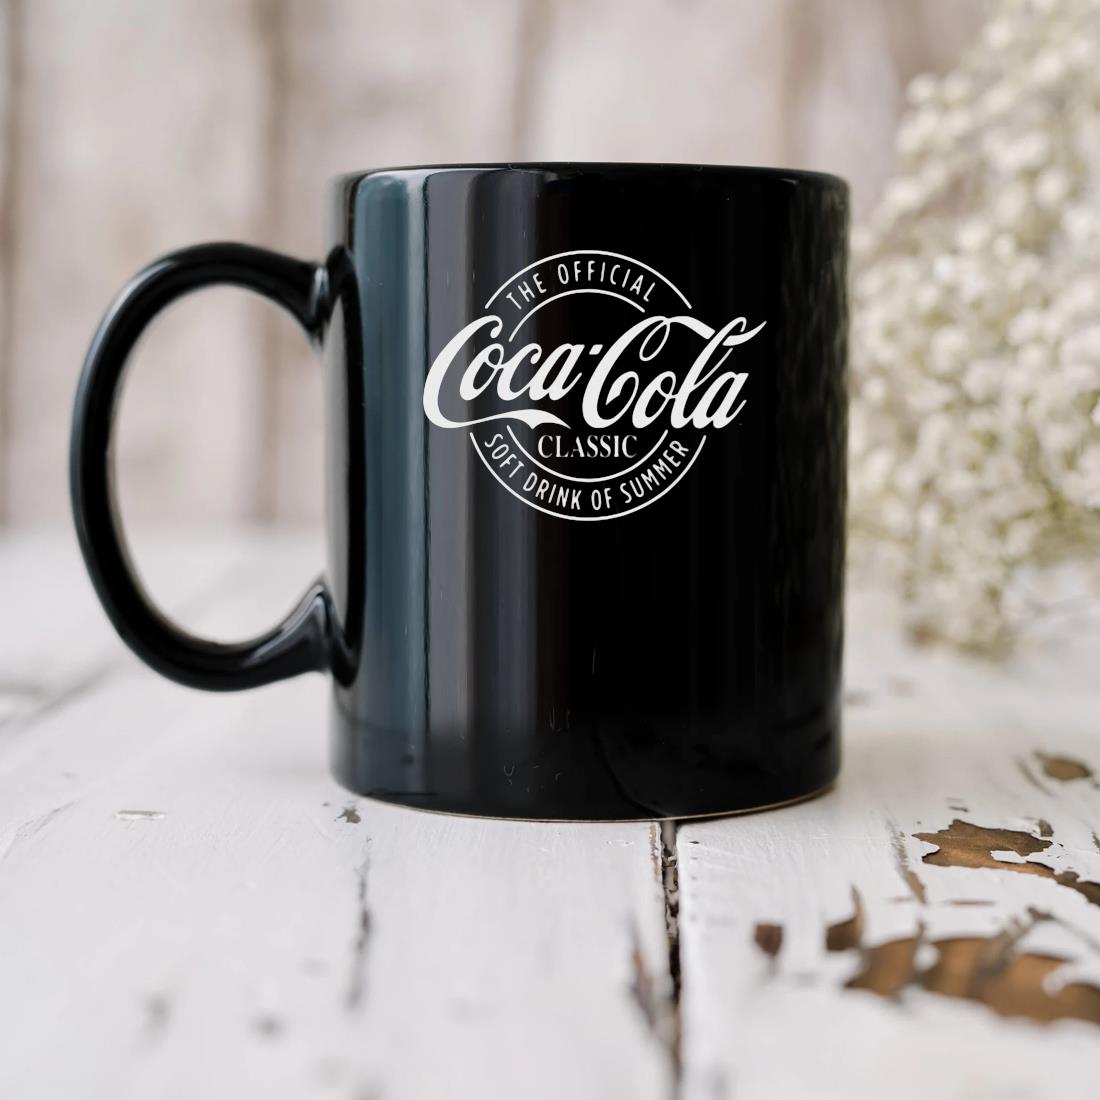 The Official Soft Drink Of Summer Coca-cola Mug